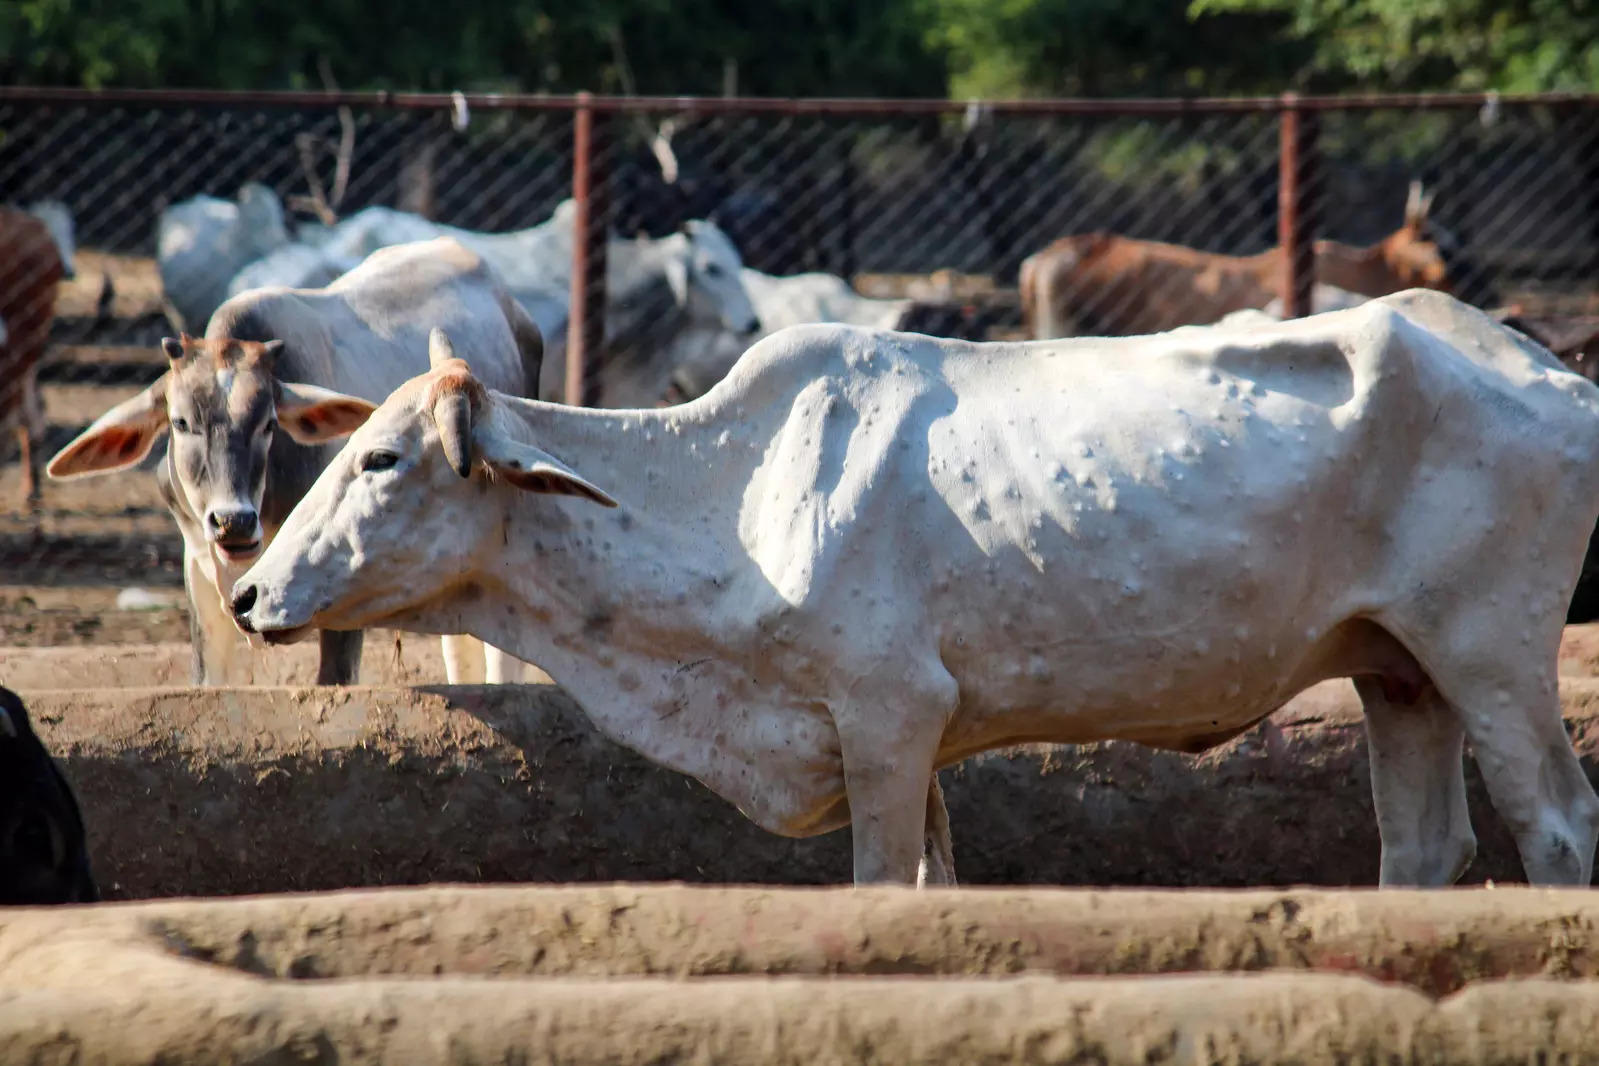 Lumpy skin disease widespread among cattle: HC, asks Maha response on plea seeking policy